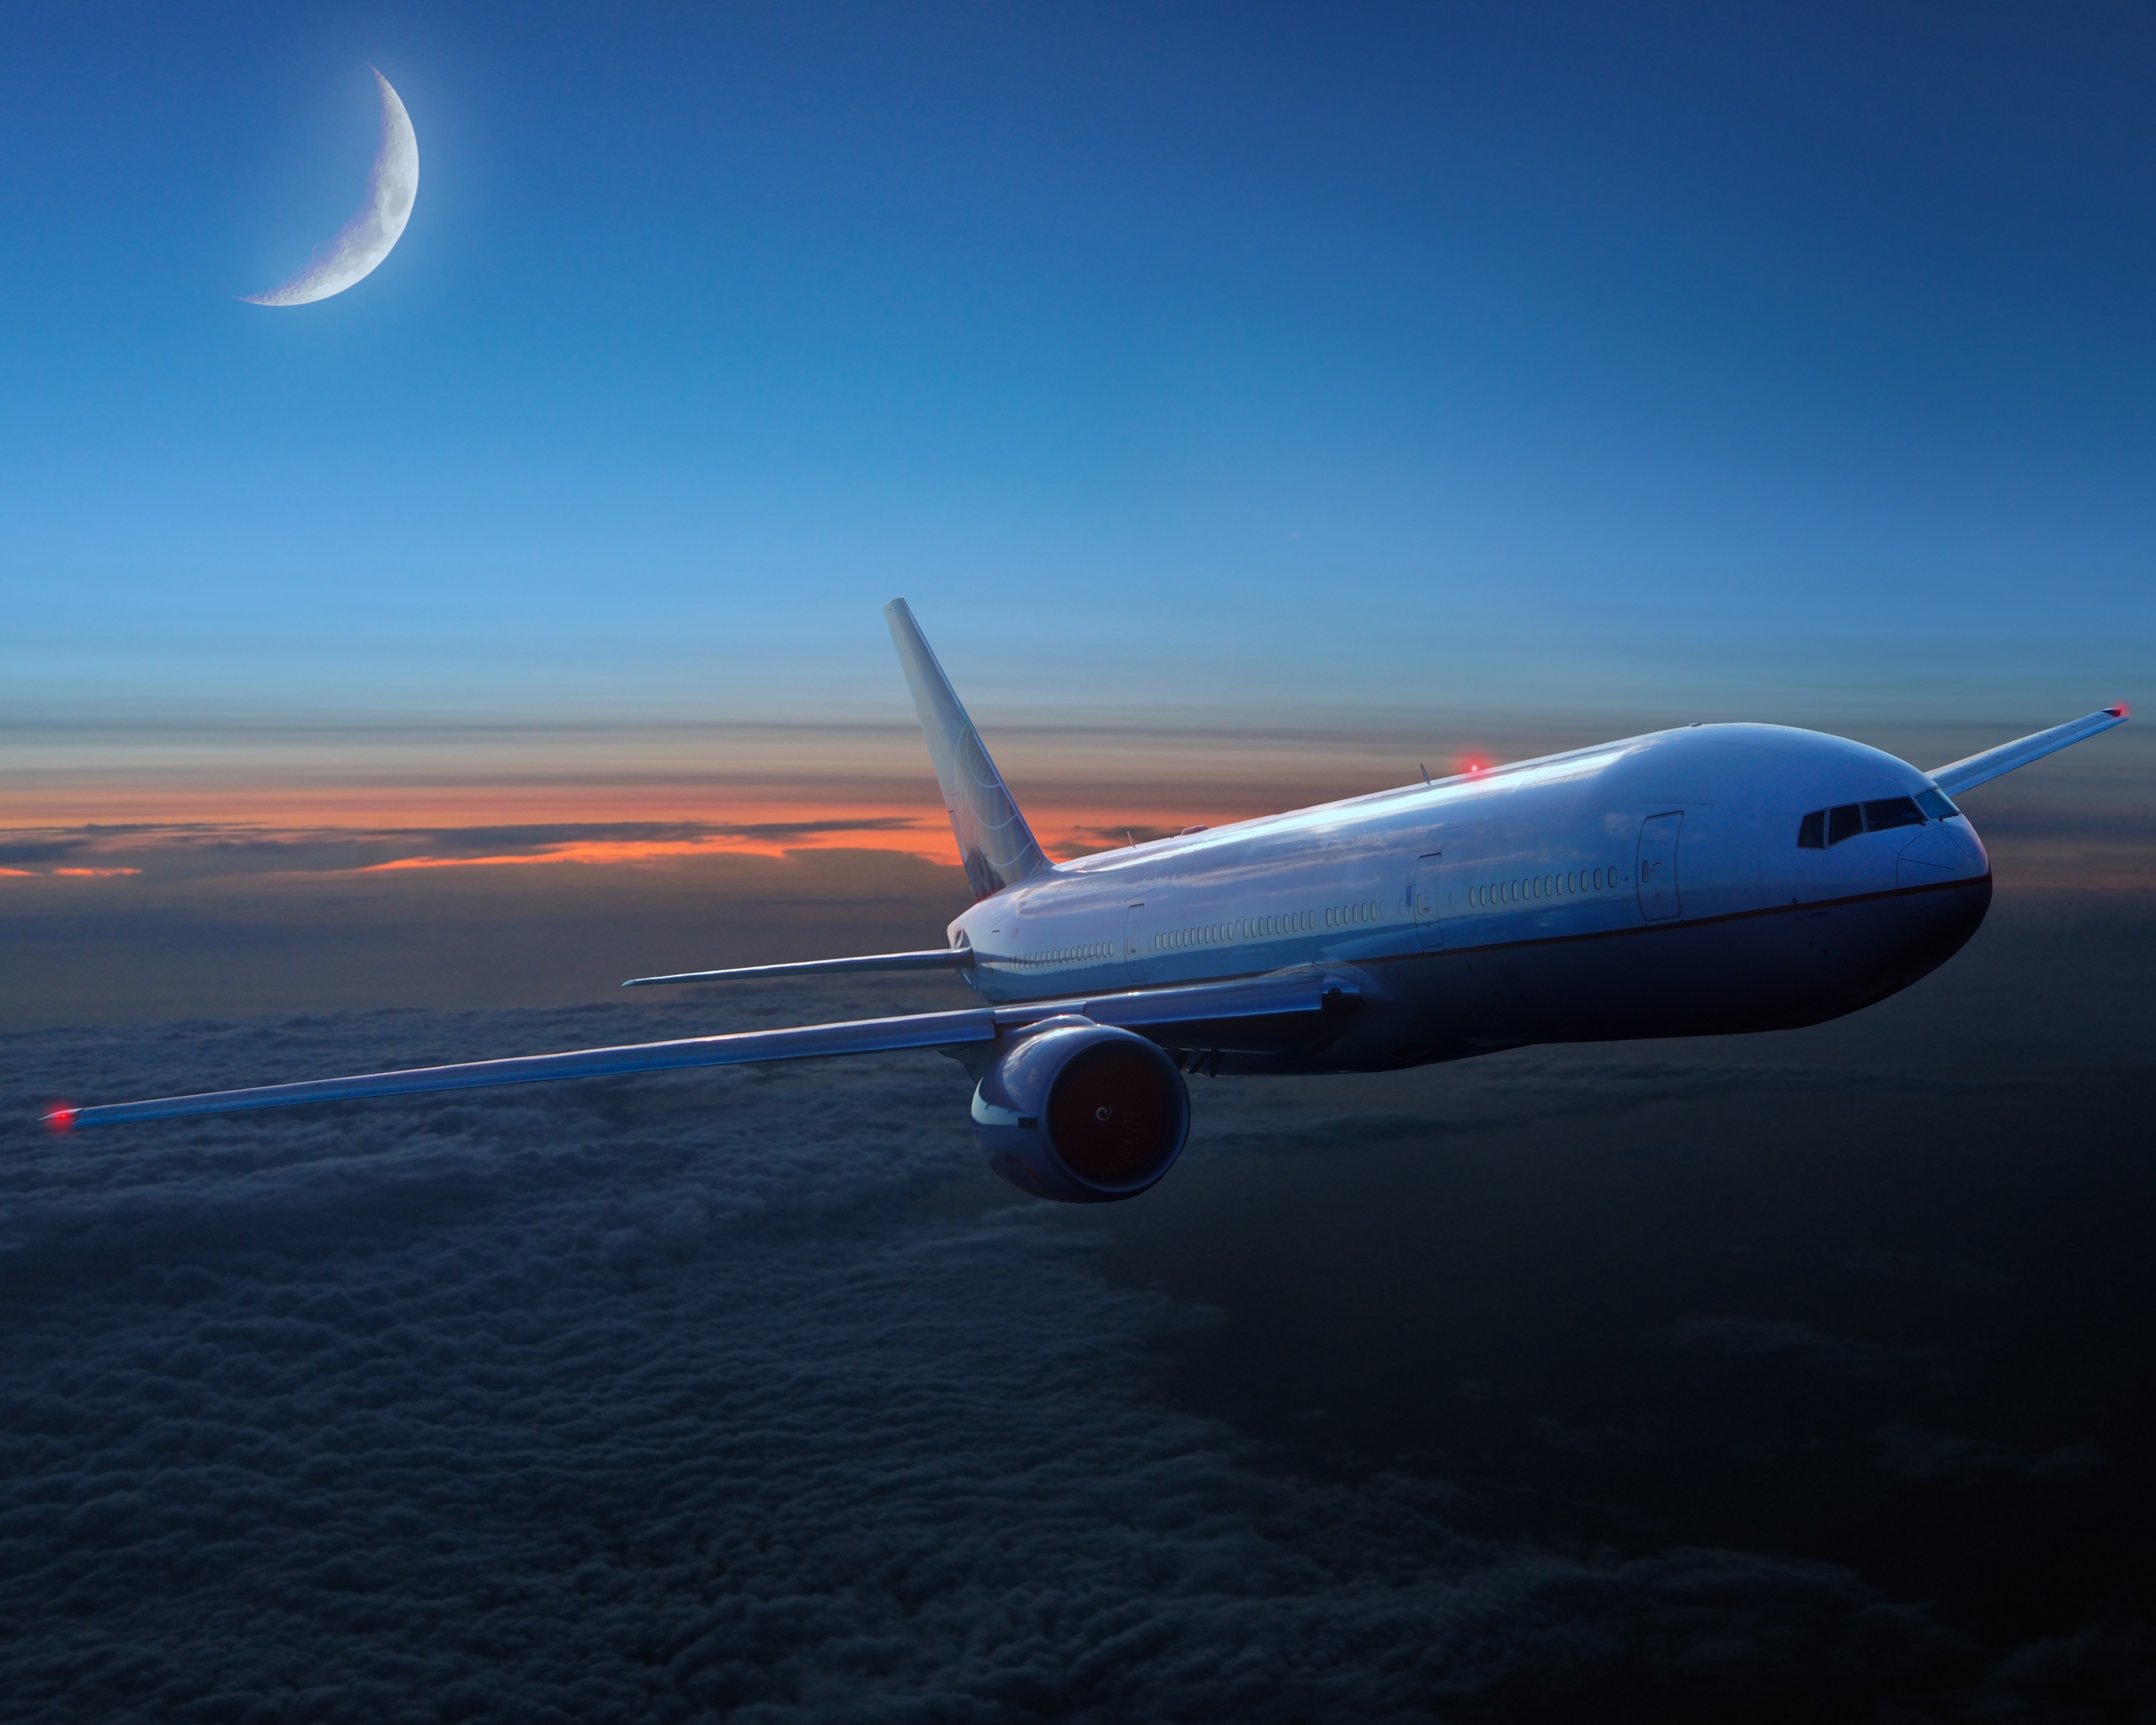 Картинка: Самолёт, вечер, сумерки, облака, небо, месяц, луна